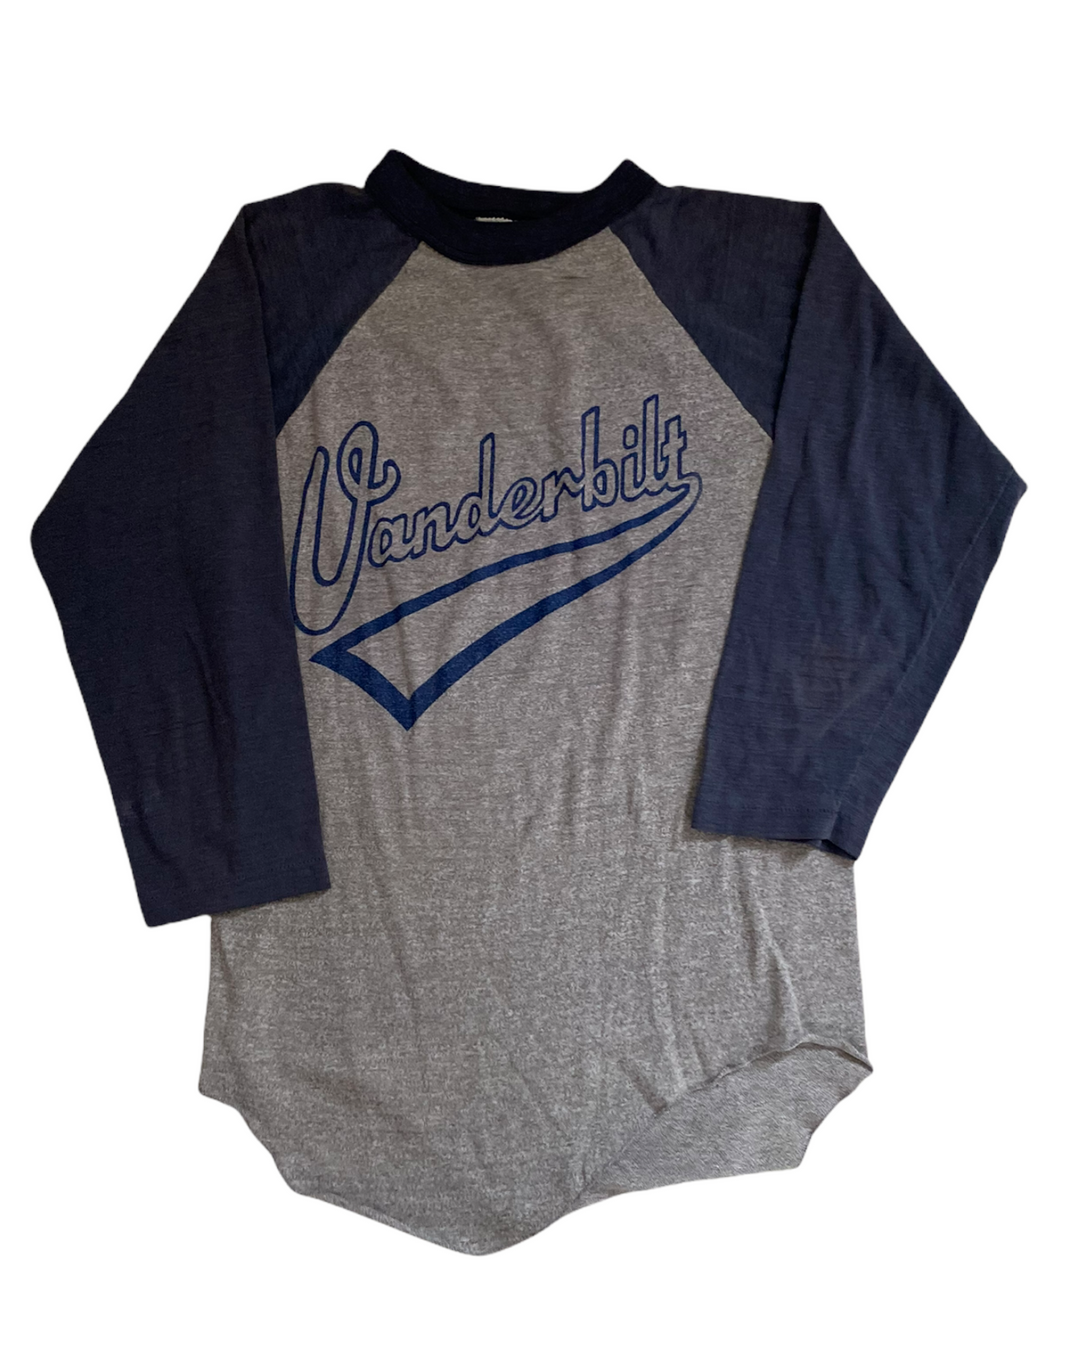 Vanderbilt Vintage T-Shirt